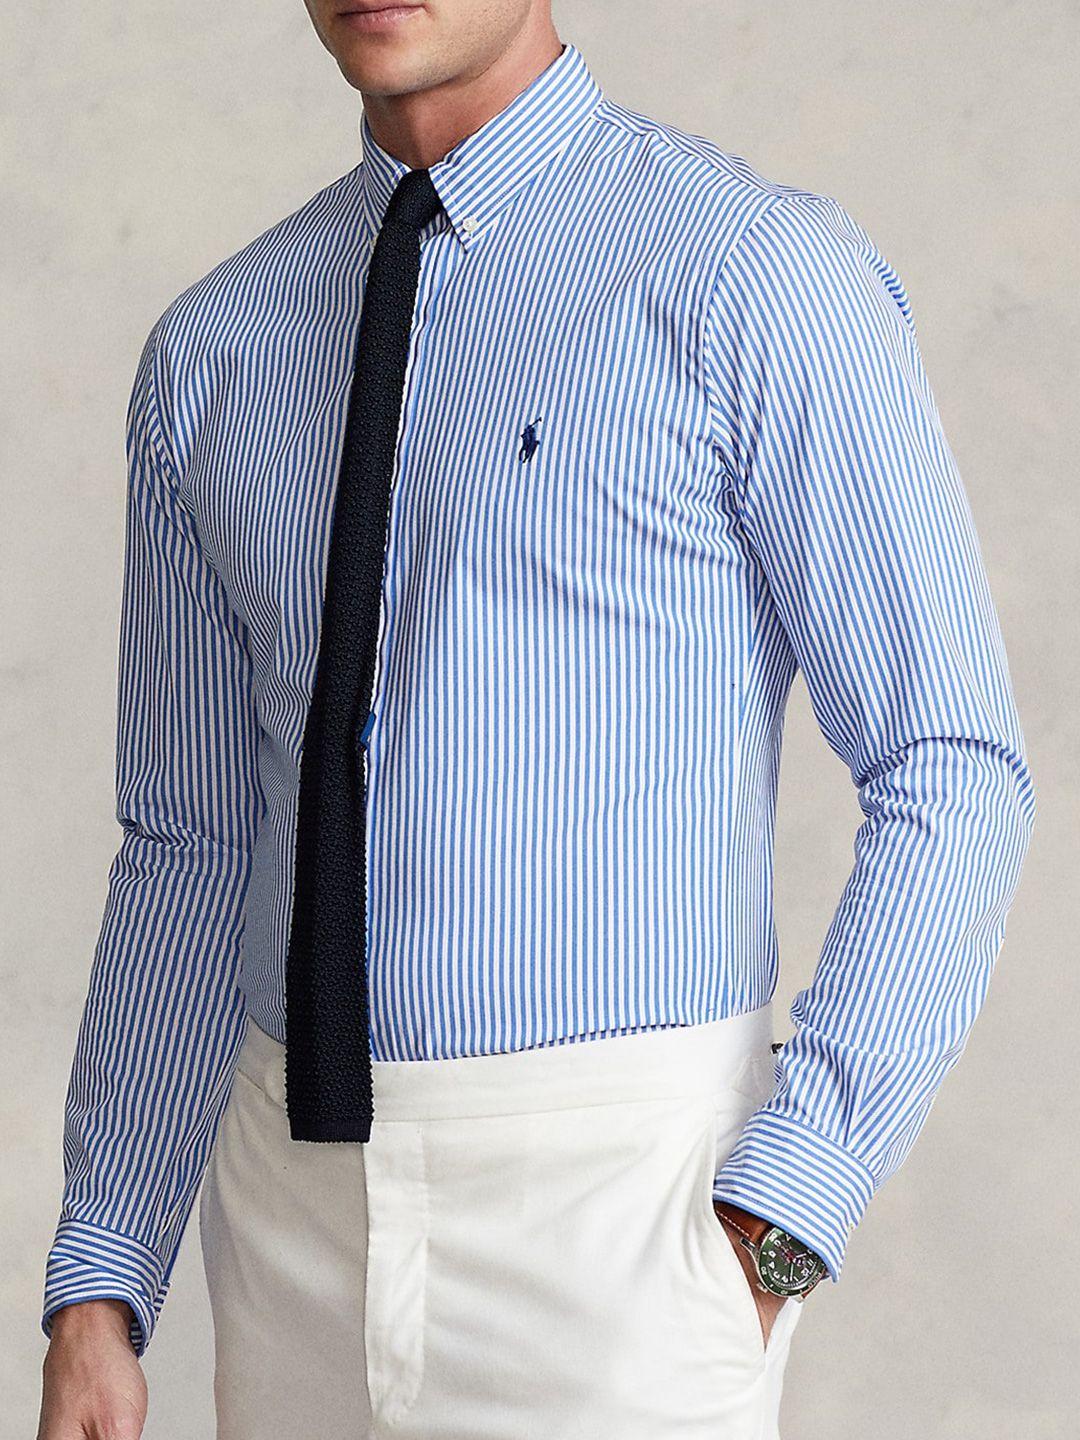 polo-ralph-lauren-custom-fit-vertical-striped-button-down-collar-cotton-formal-shirt